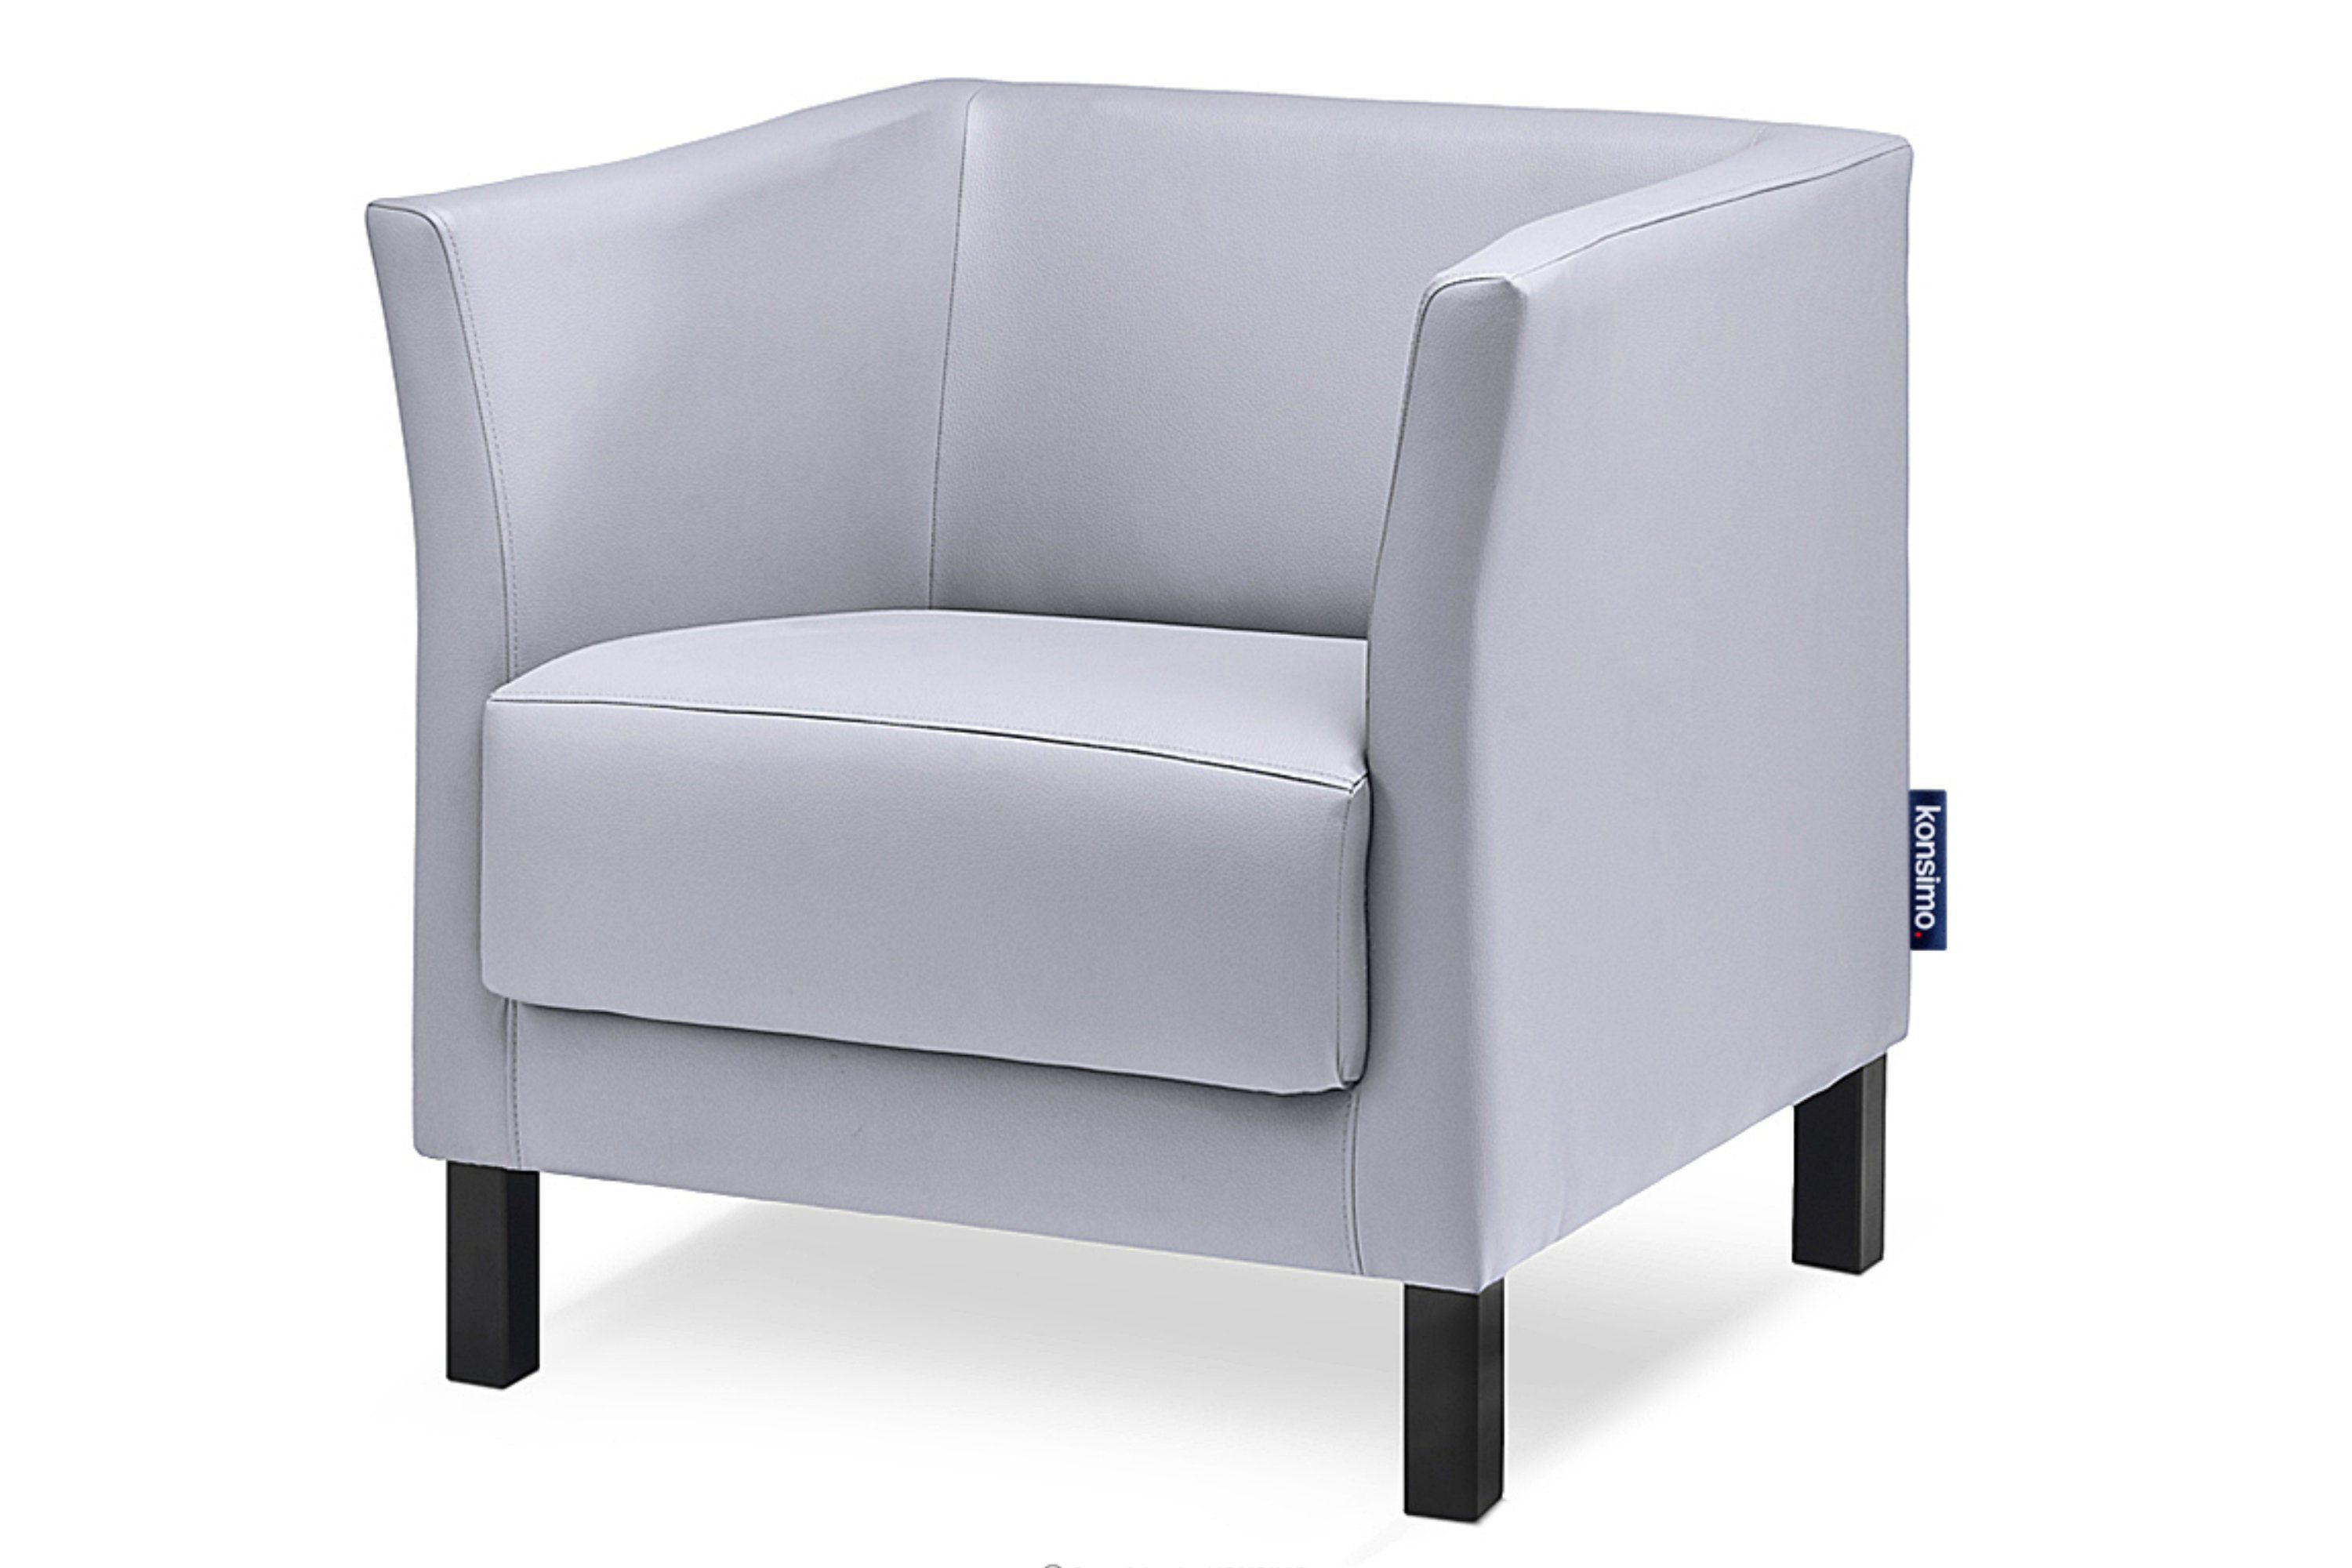 Konsimo Sessel ESPECTO Sessel, hohe Massivholzbeine, weiche Sitzfläche und hohe Rückenlehne, Kunstleder grau | grau | grau